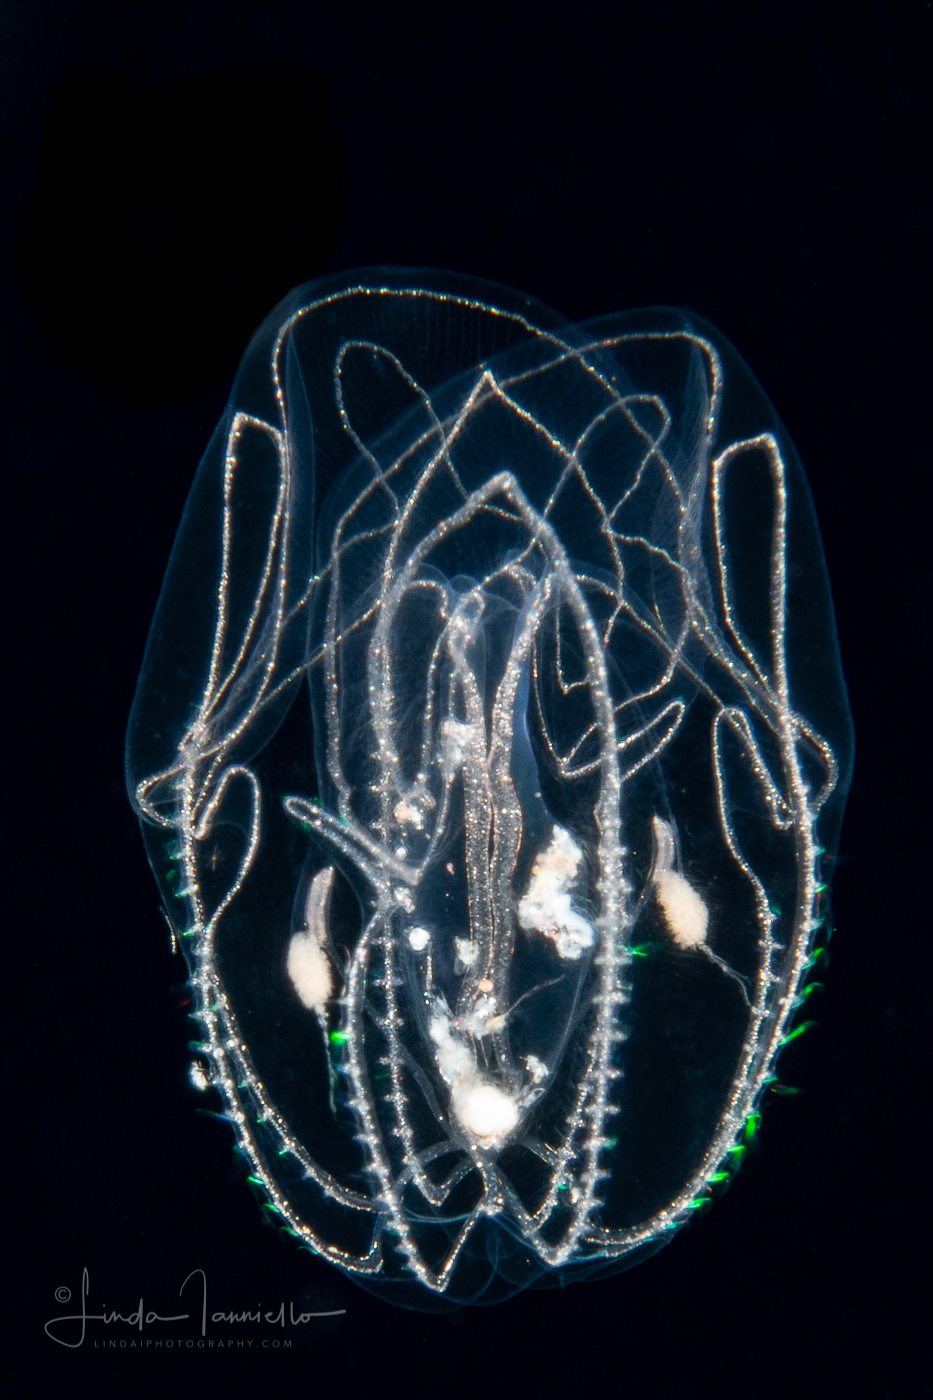 Ctenophore - Bolinopsidae - Bolinopsis vitrea - Juvenile